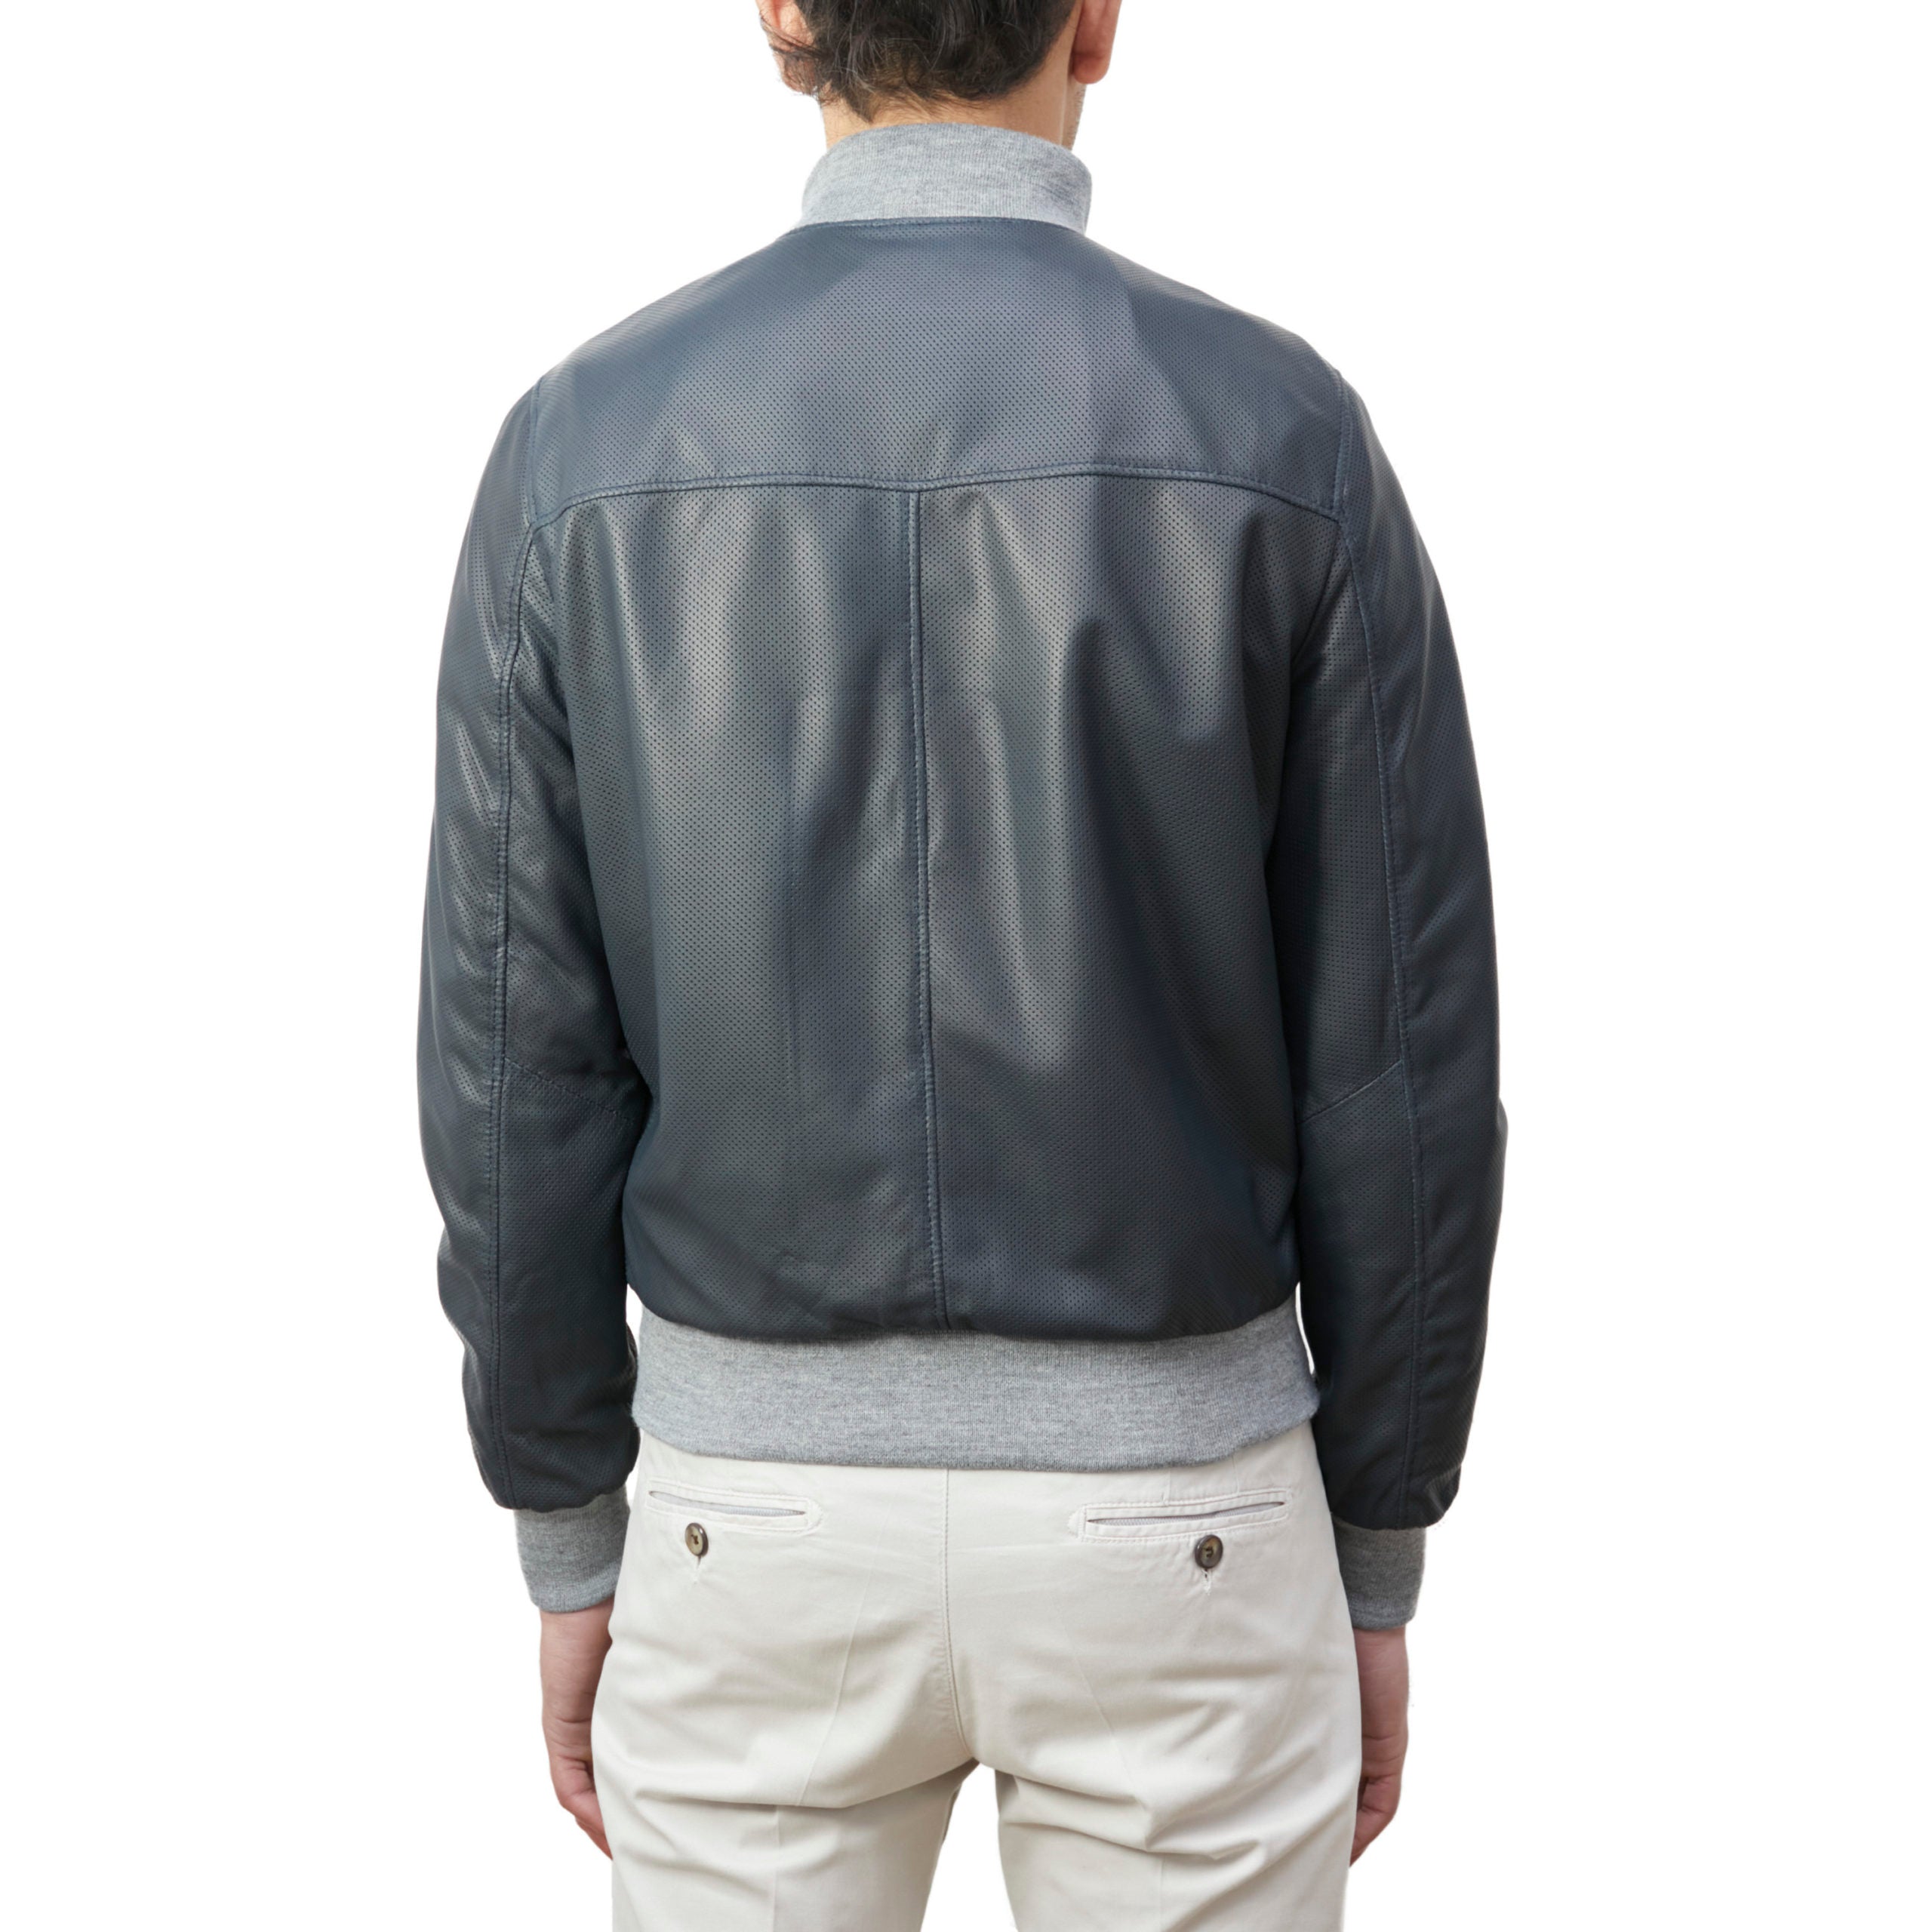 88PNFMA leather jacket